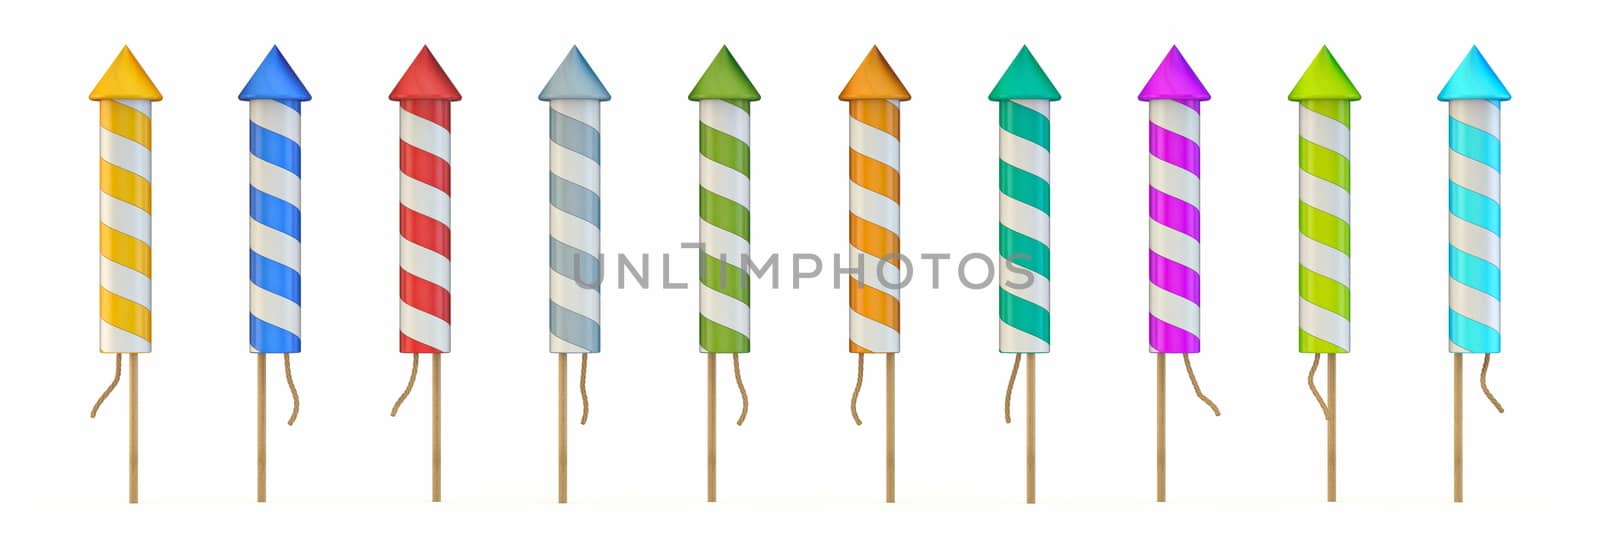 Set of multicolored rocket fireworks  3D render illustration isolated on white background